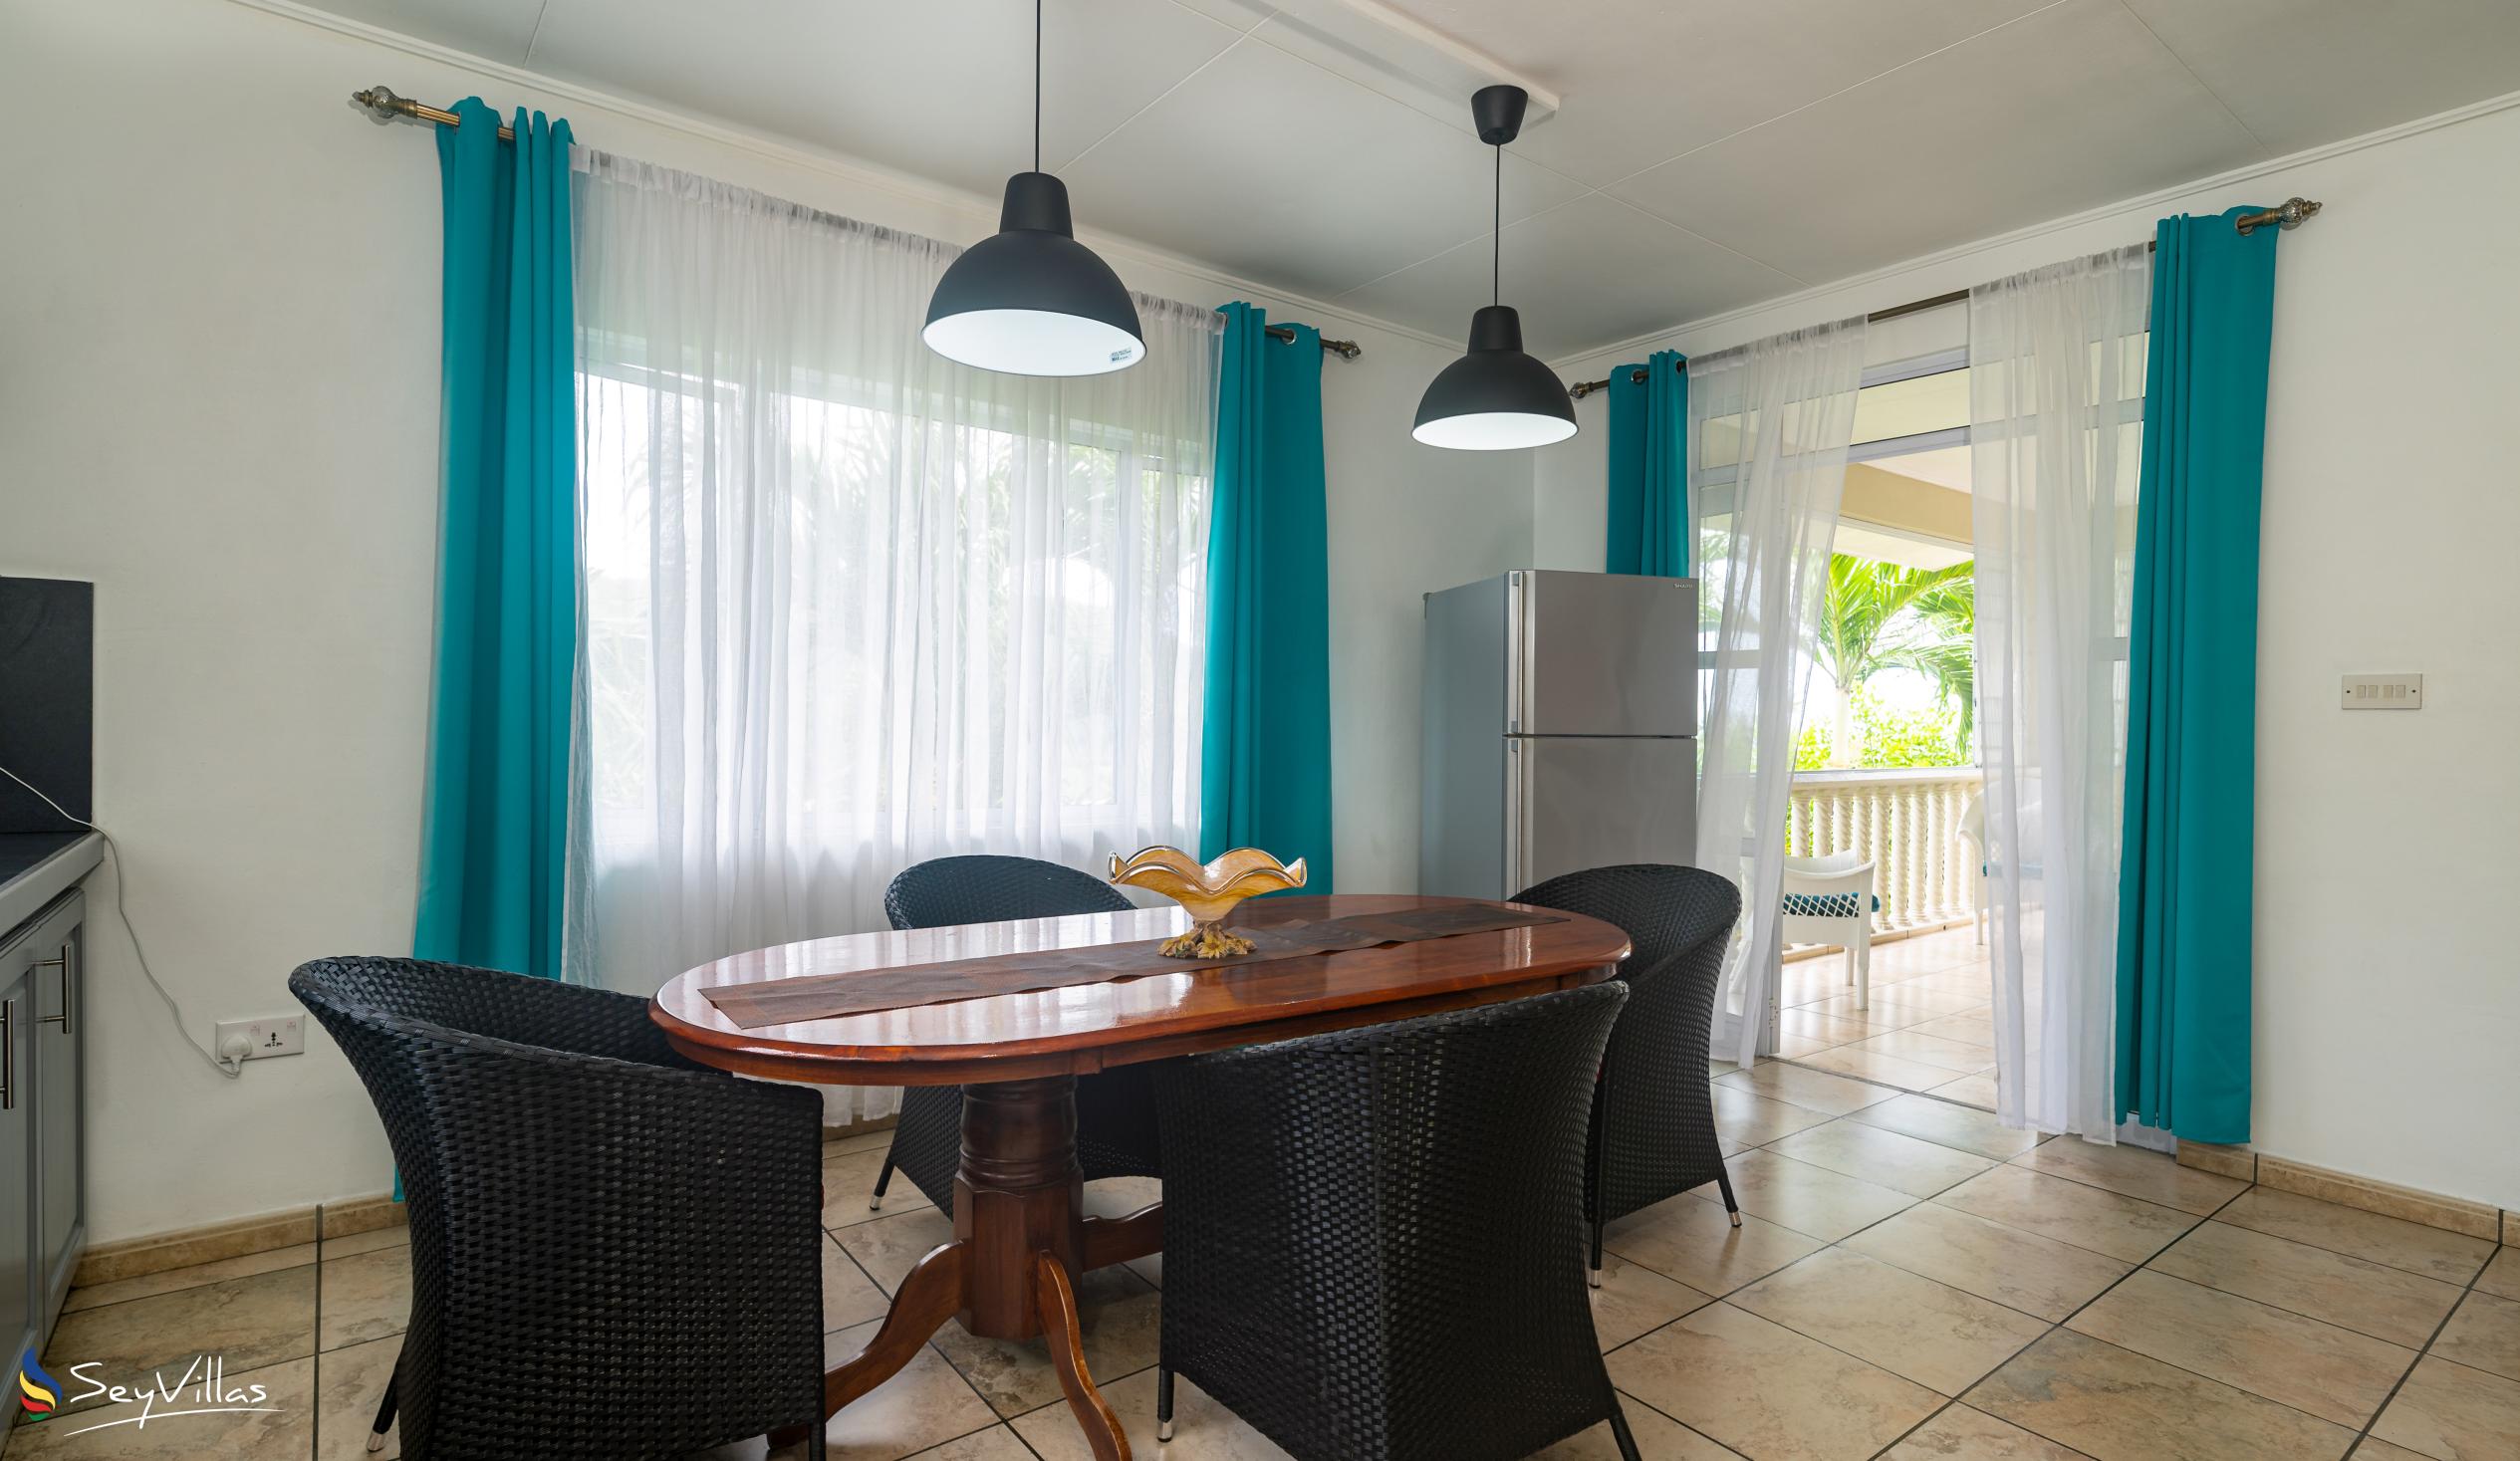 Photo 102: Stephna Residence - 2-Bedroom Villa - Mahé (Seychelles)